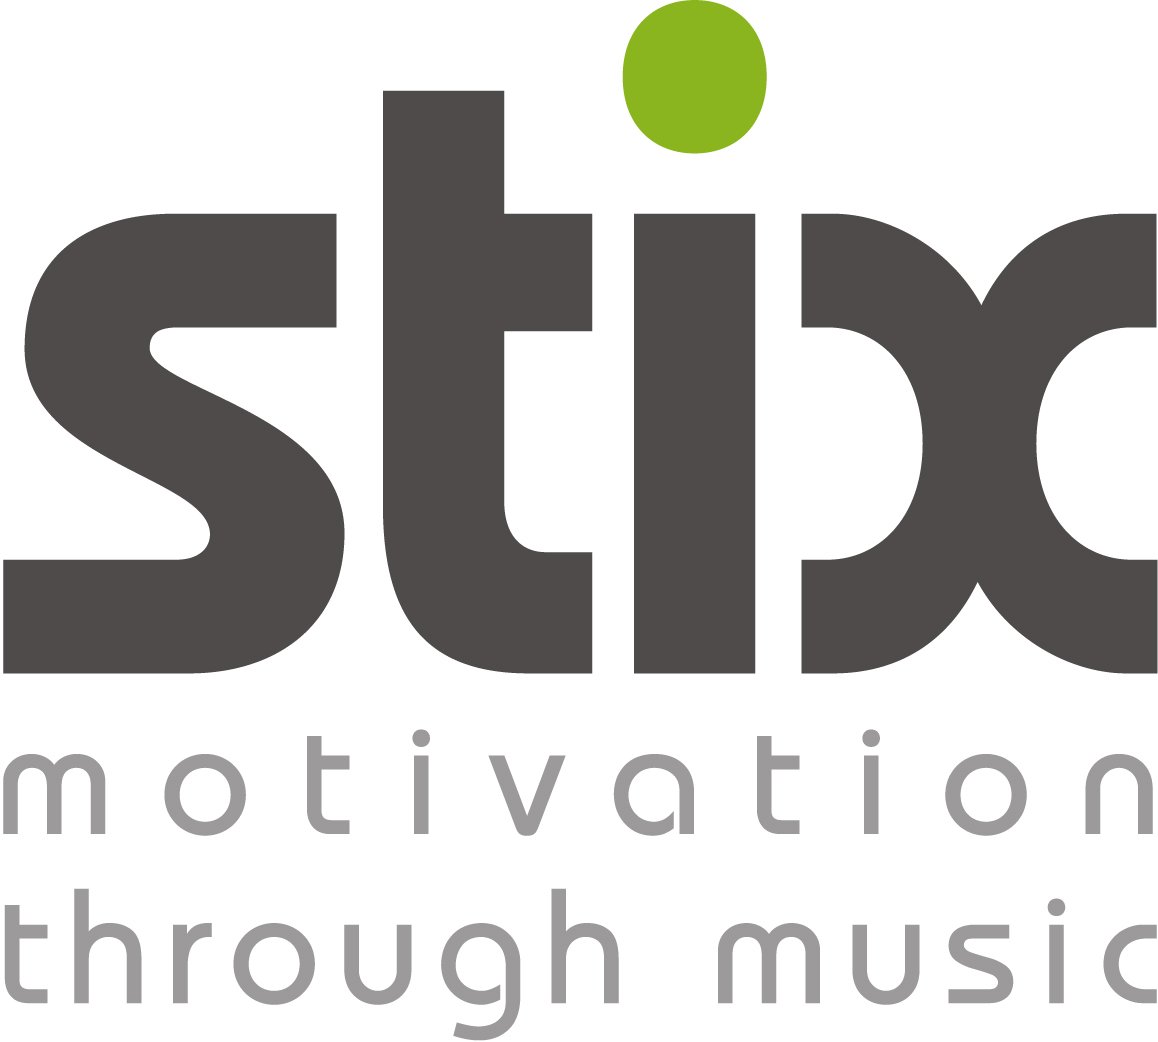 stix - motivation through music